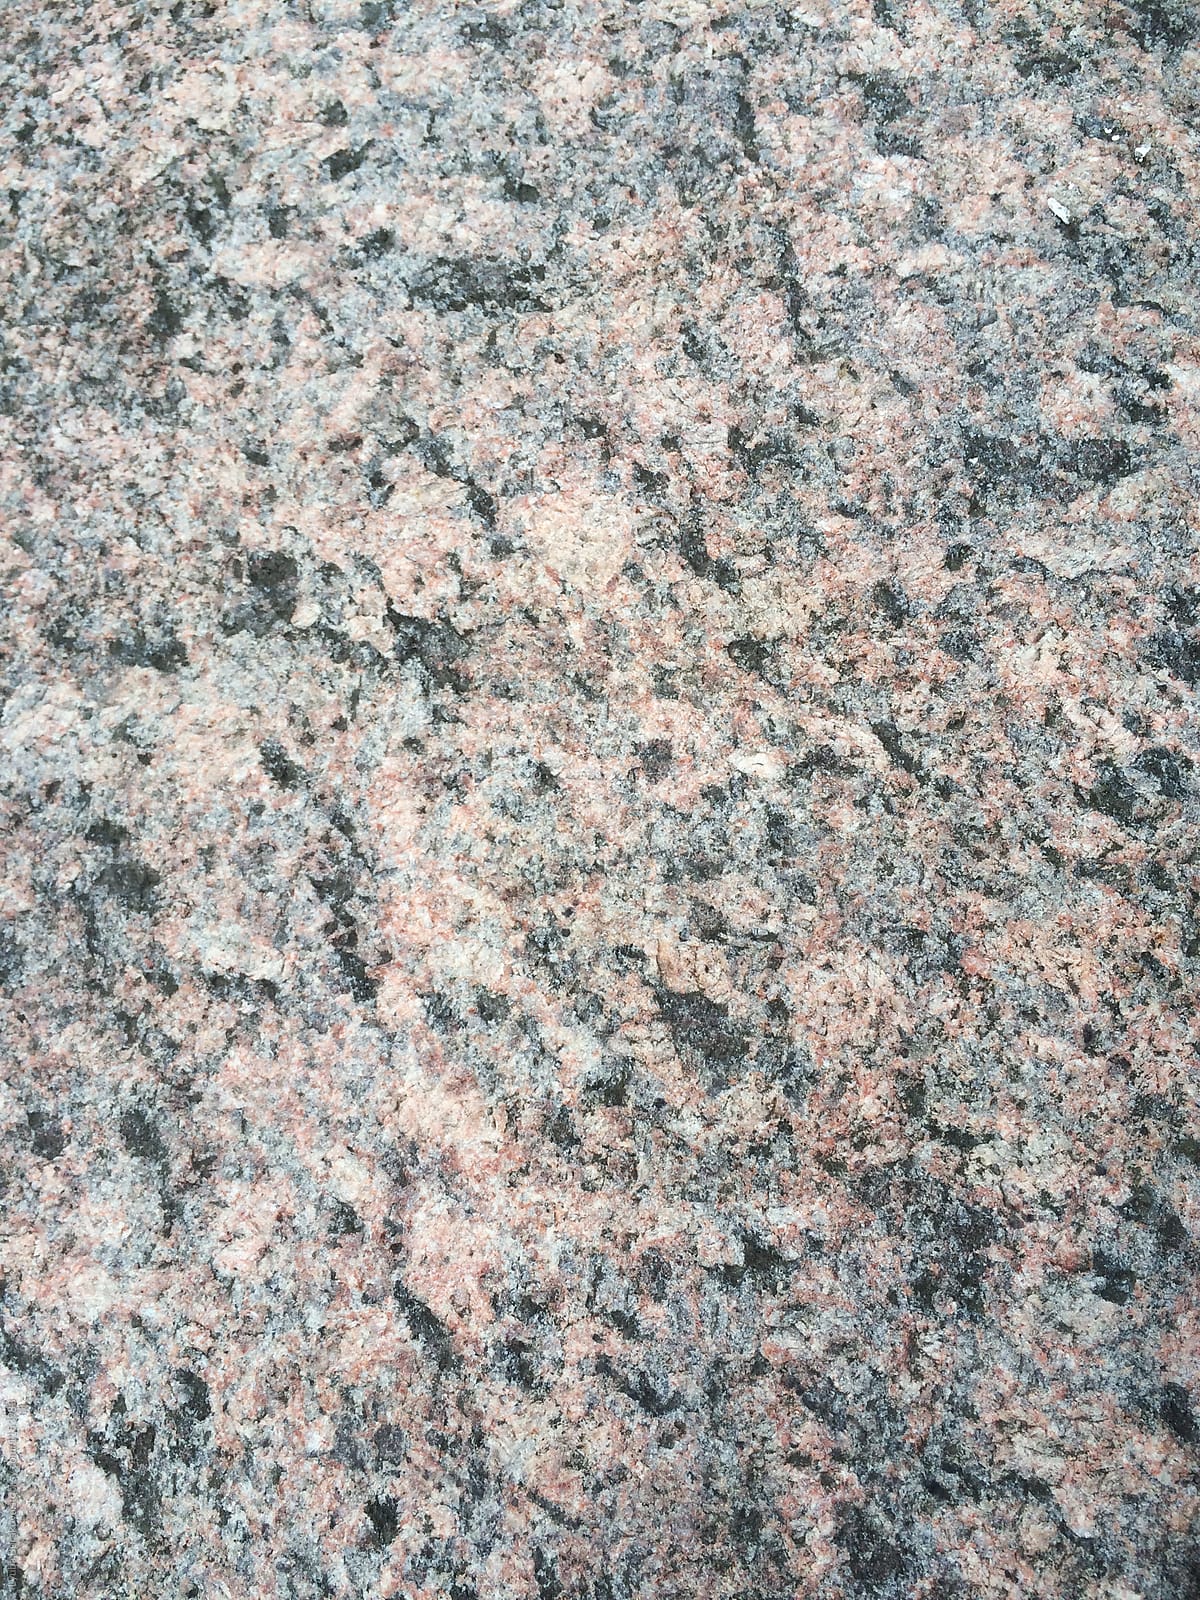 Granite background